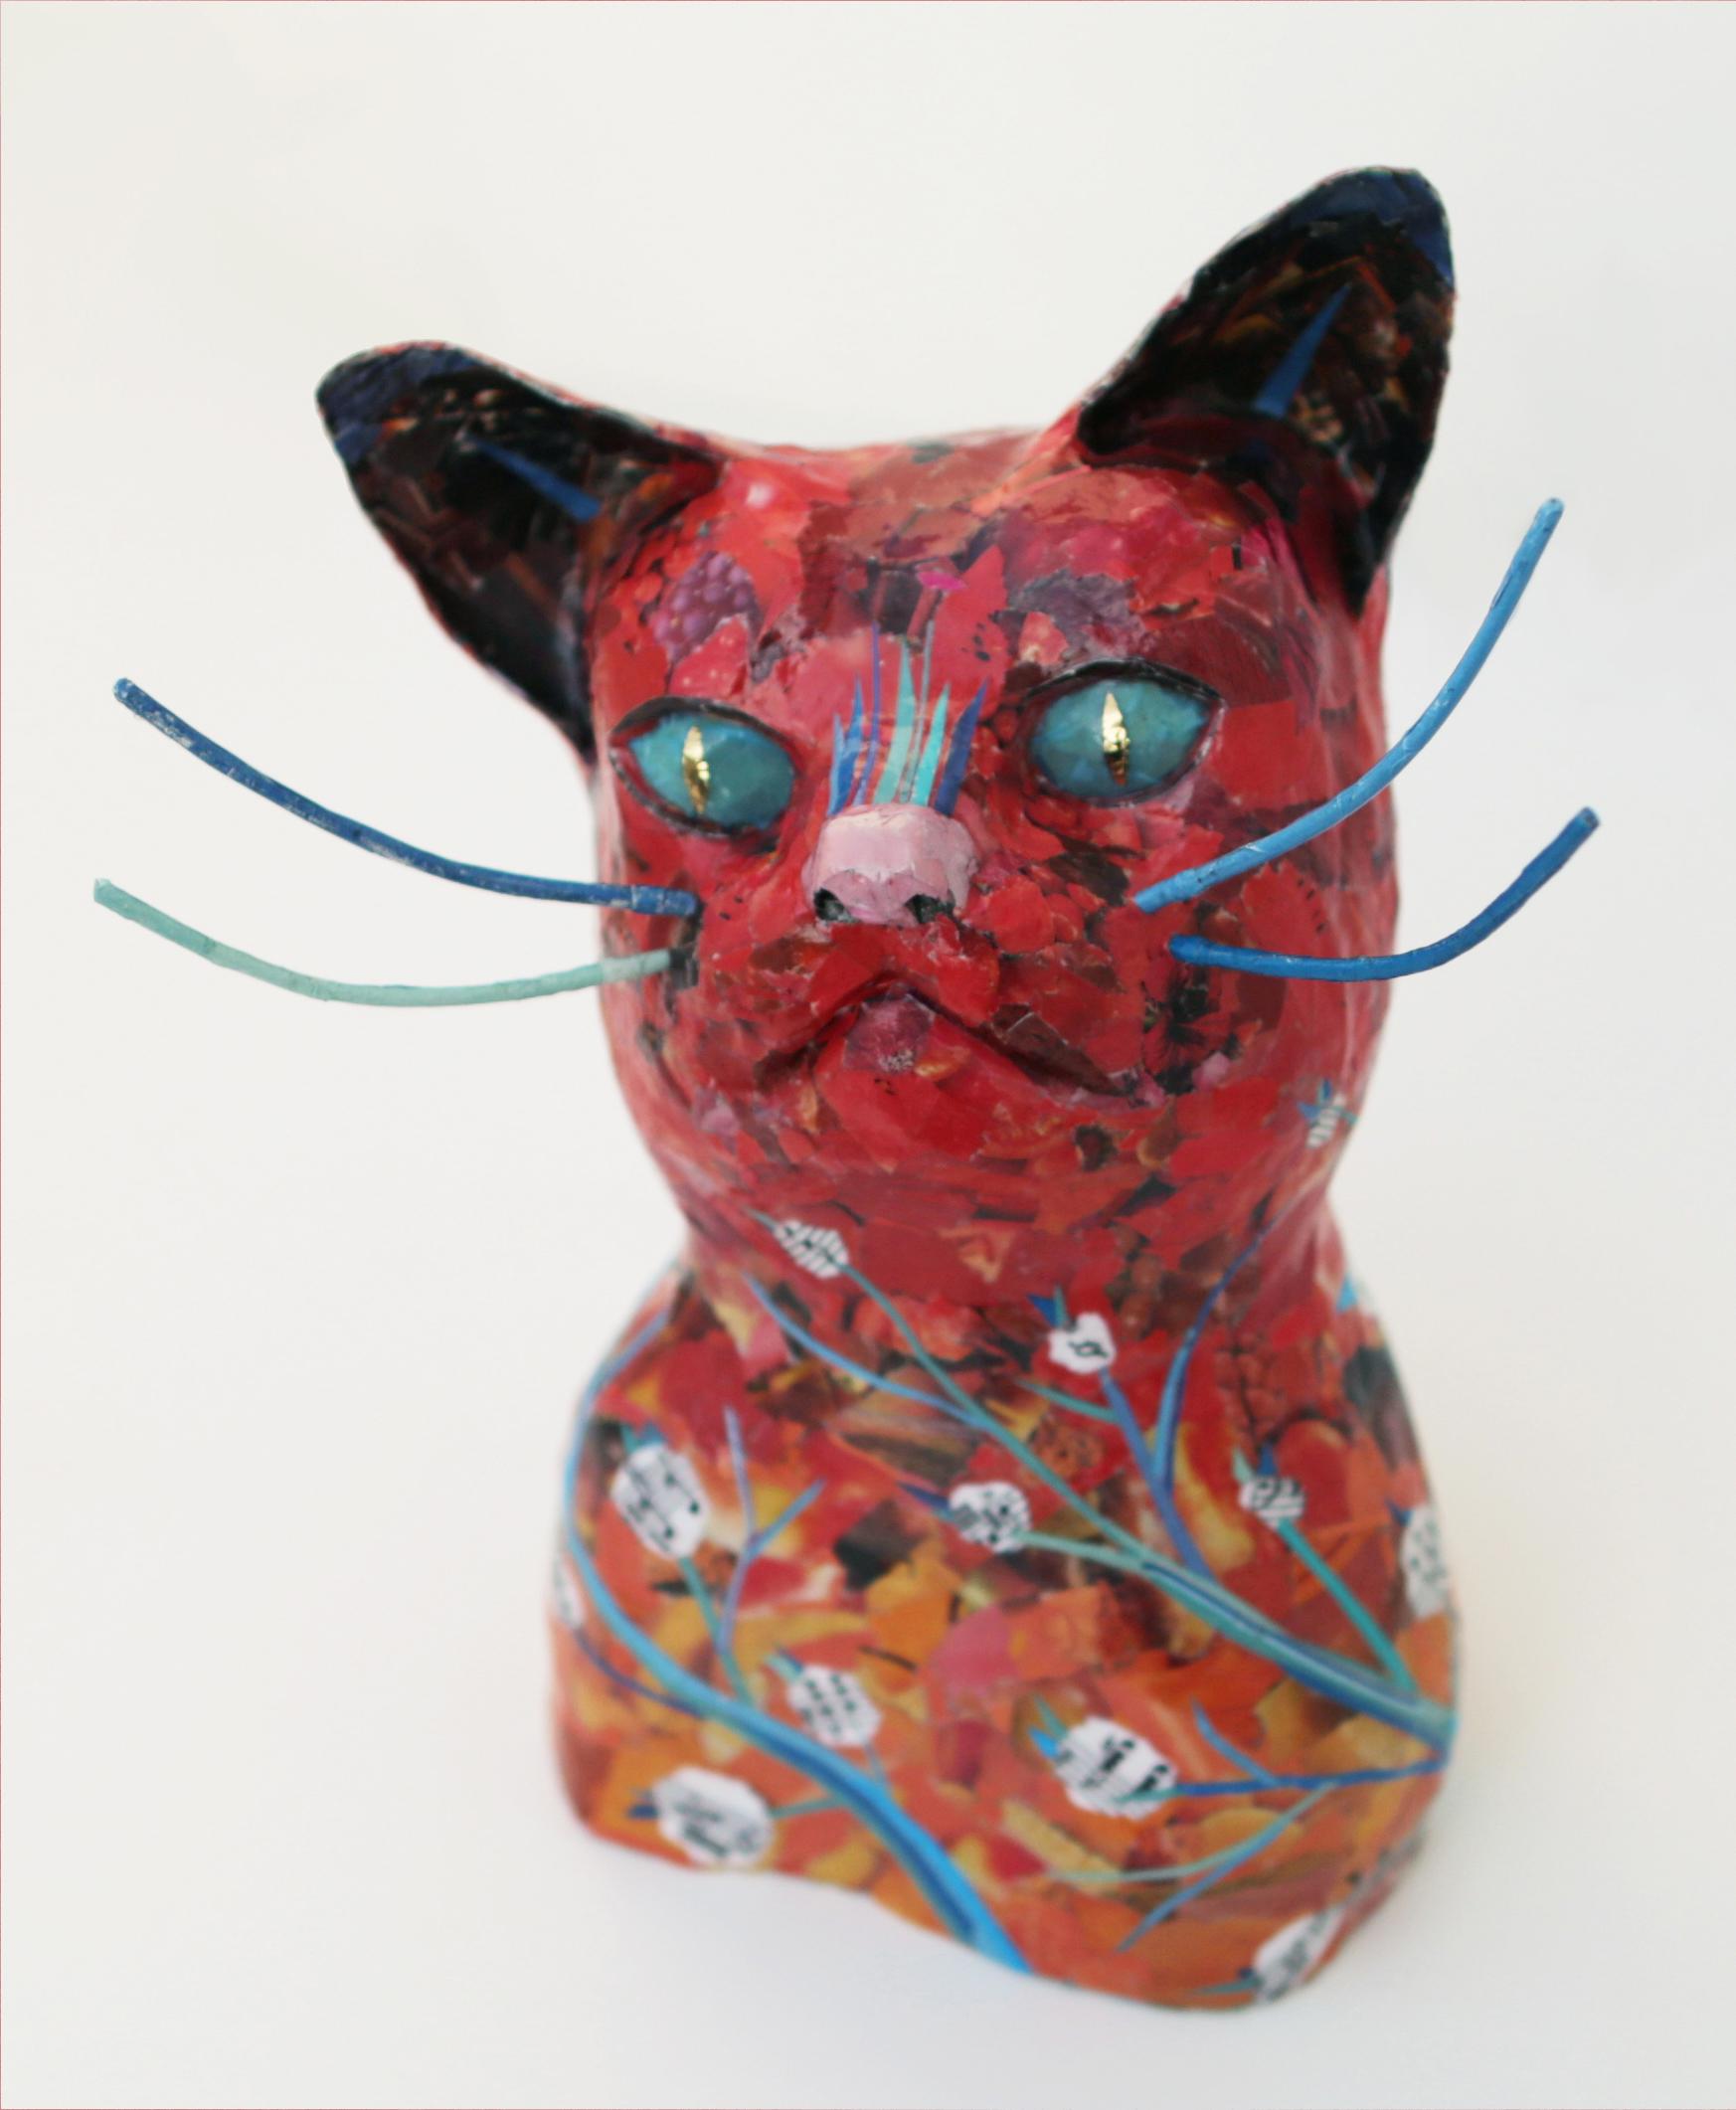 Yulia Shtern Figurative Sculpture - Forest Cat - Playful Animal Sculpture in Red + Blue + Black